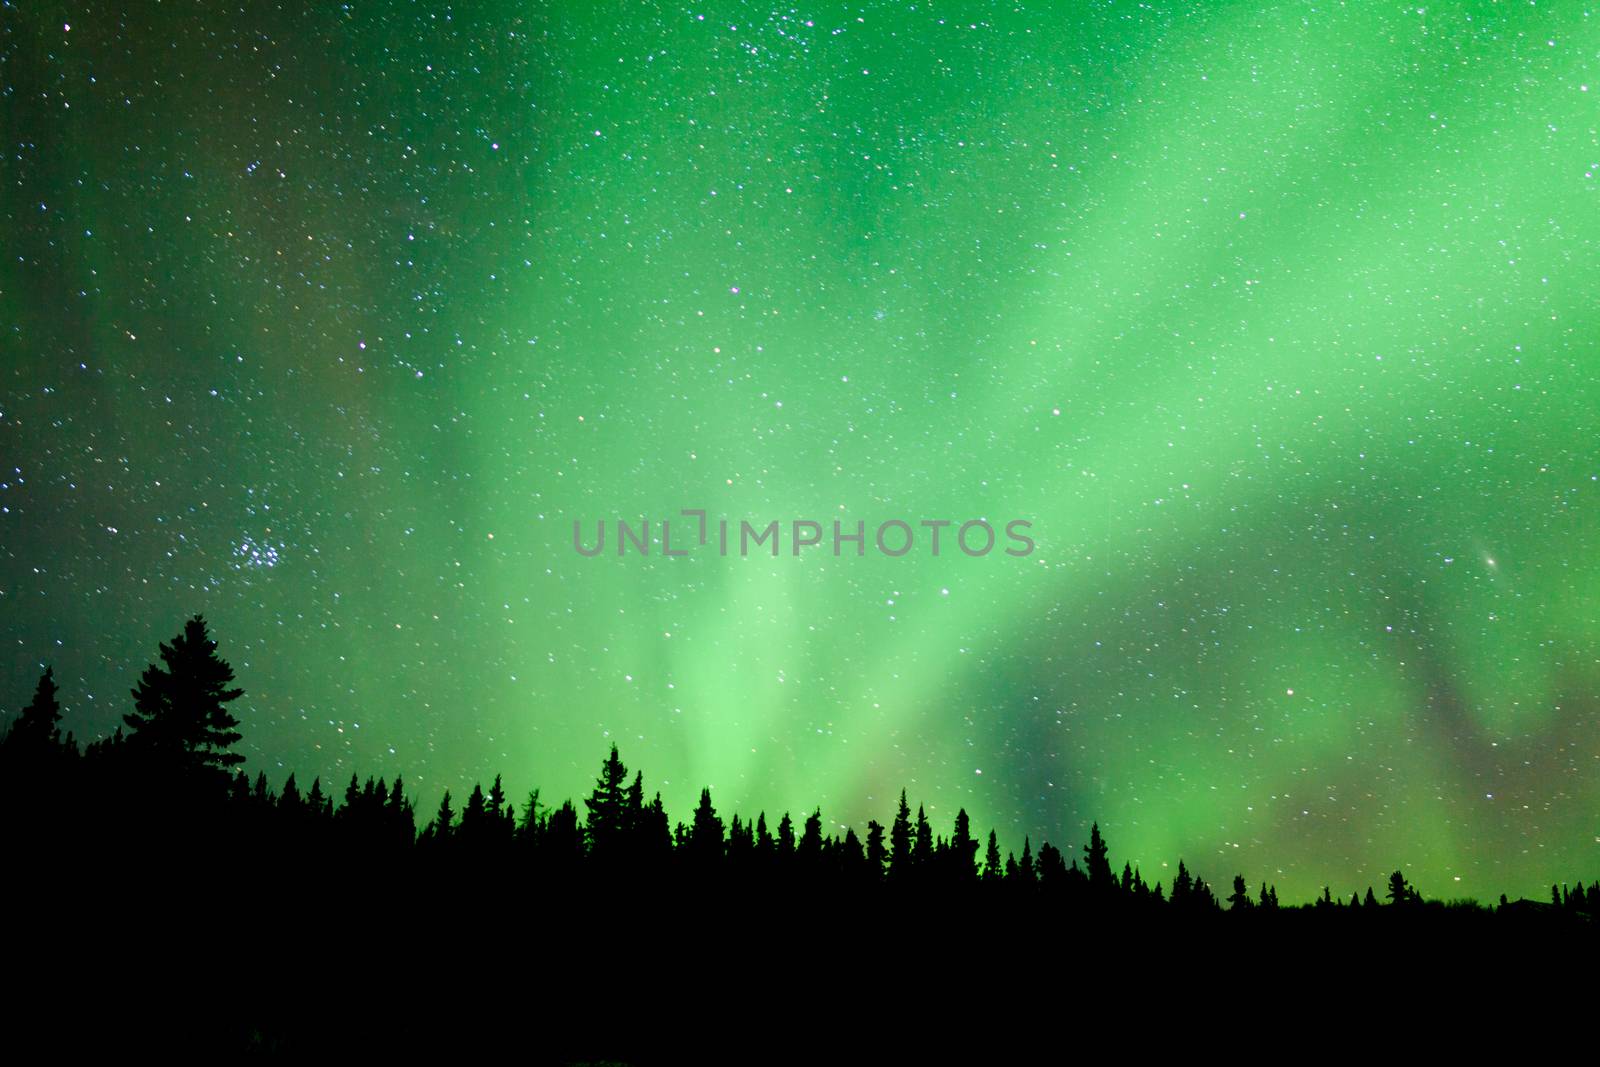 Intense green northern lights, Aurora borealis, on night sky with stars over boreal forest taiga, Yukon, Canada